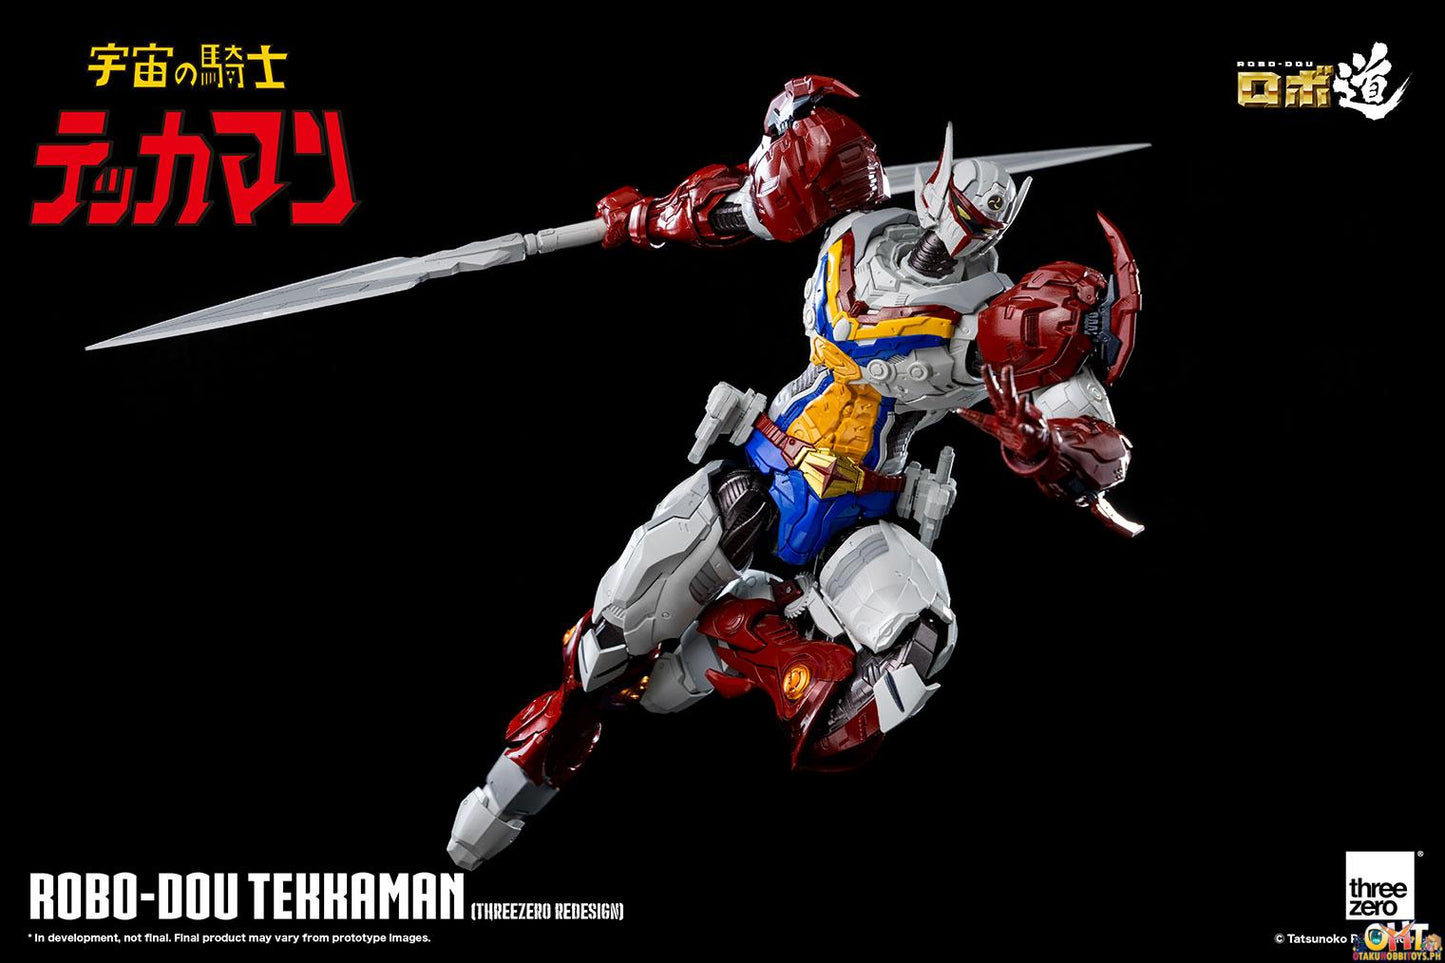 Threezero Tekkaman: The Space Knight ROBO-DOU Tekkaman (threezero Redesign)